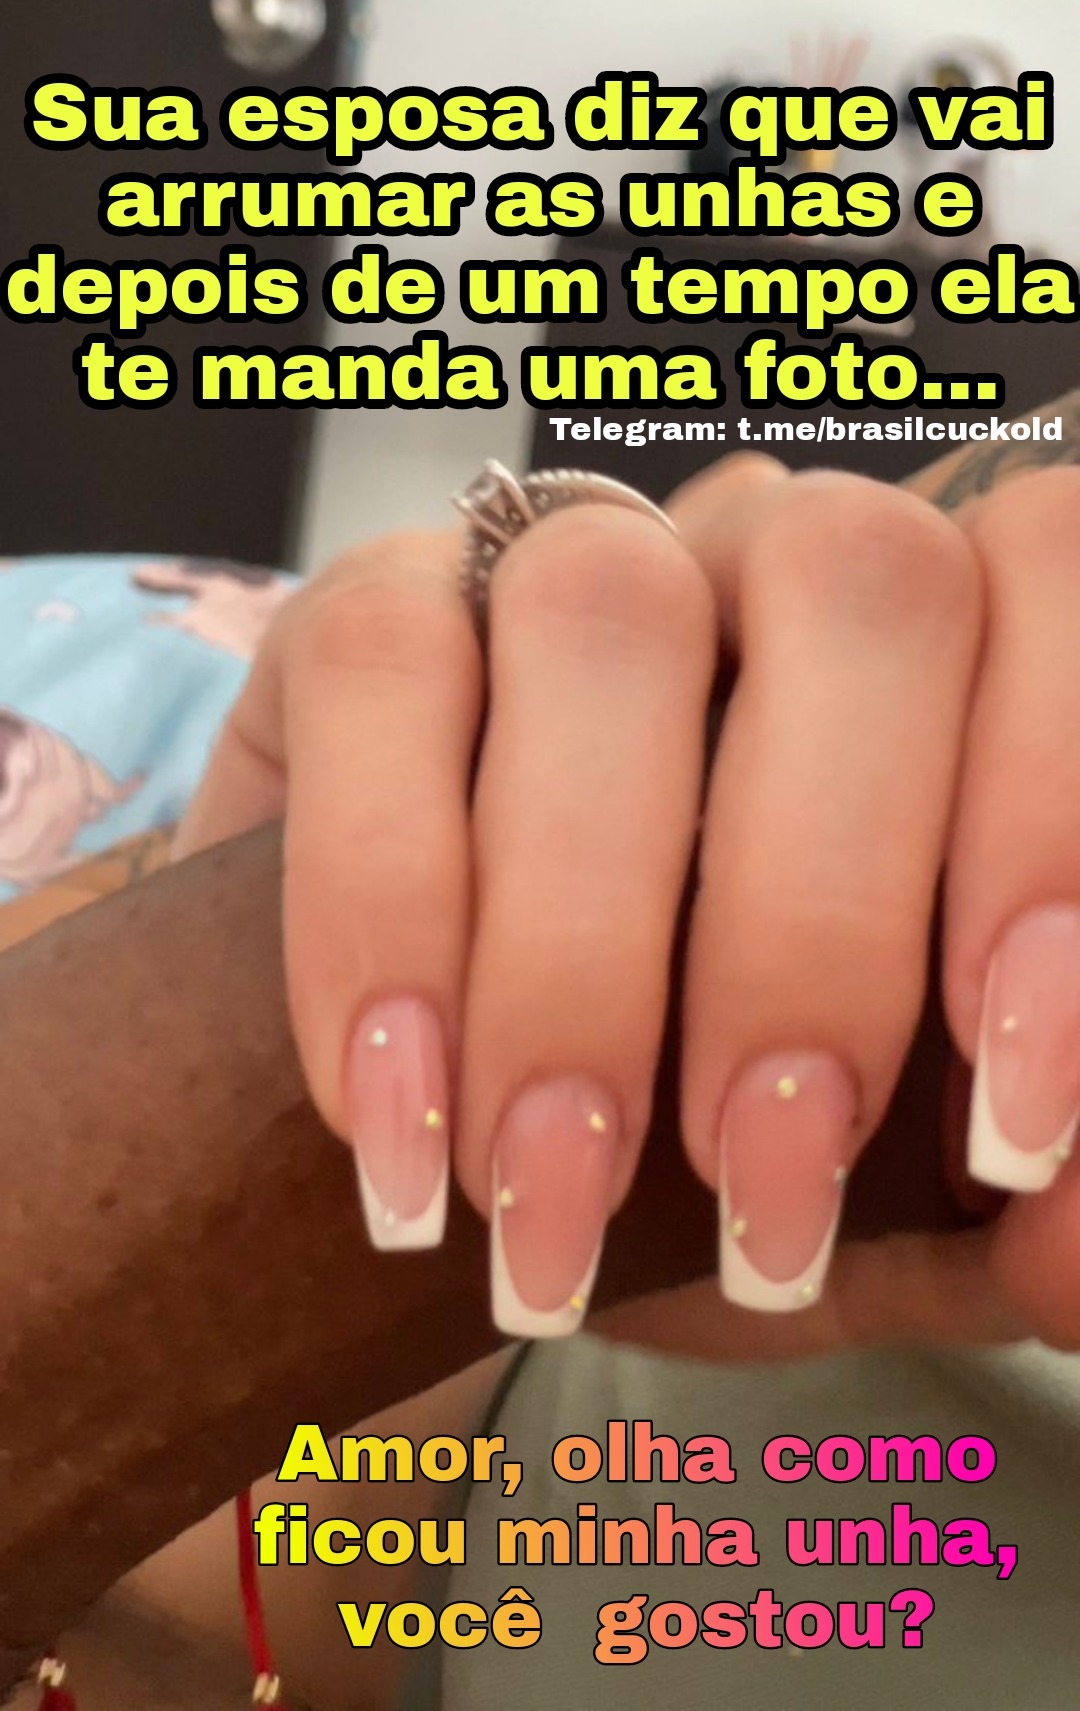 brasil-cuckold:Já imaginou a mãozinha delicada adult photos